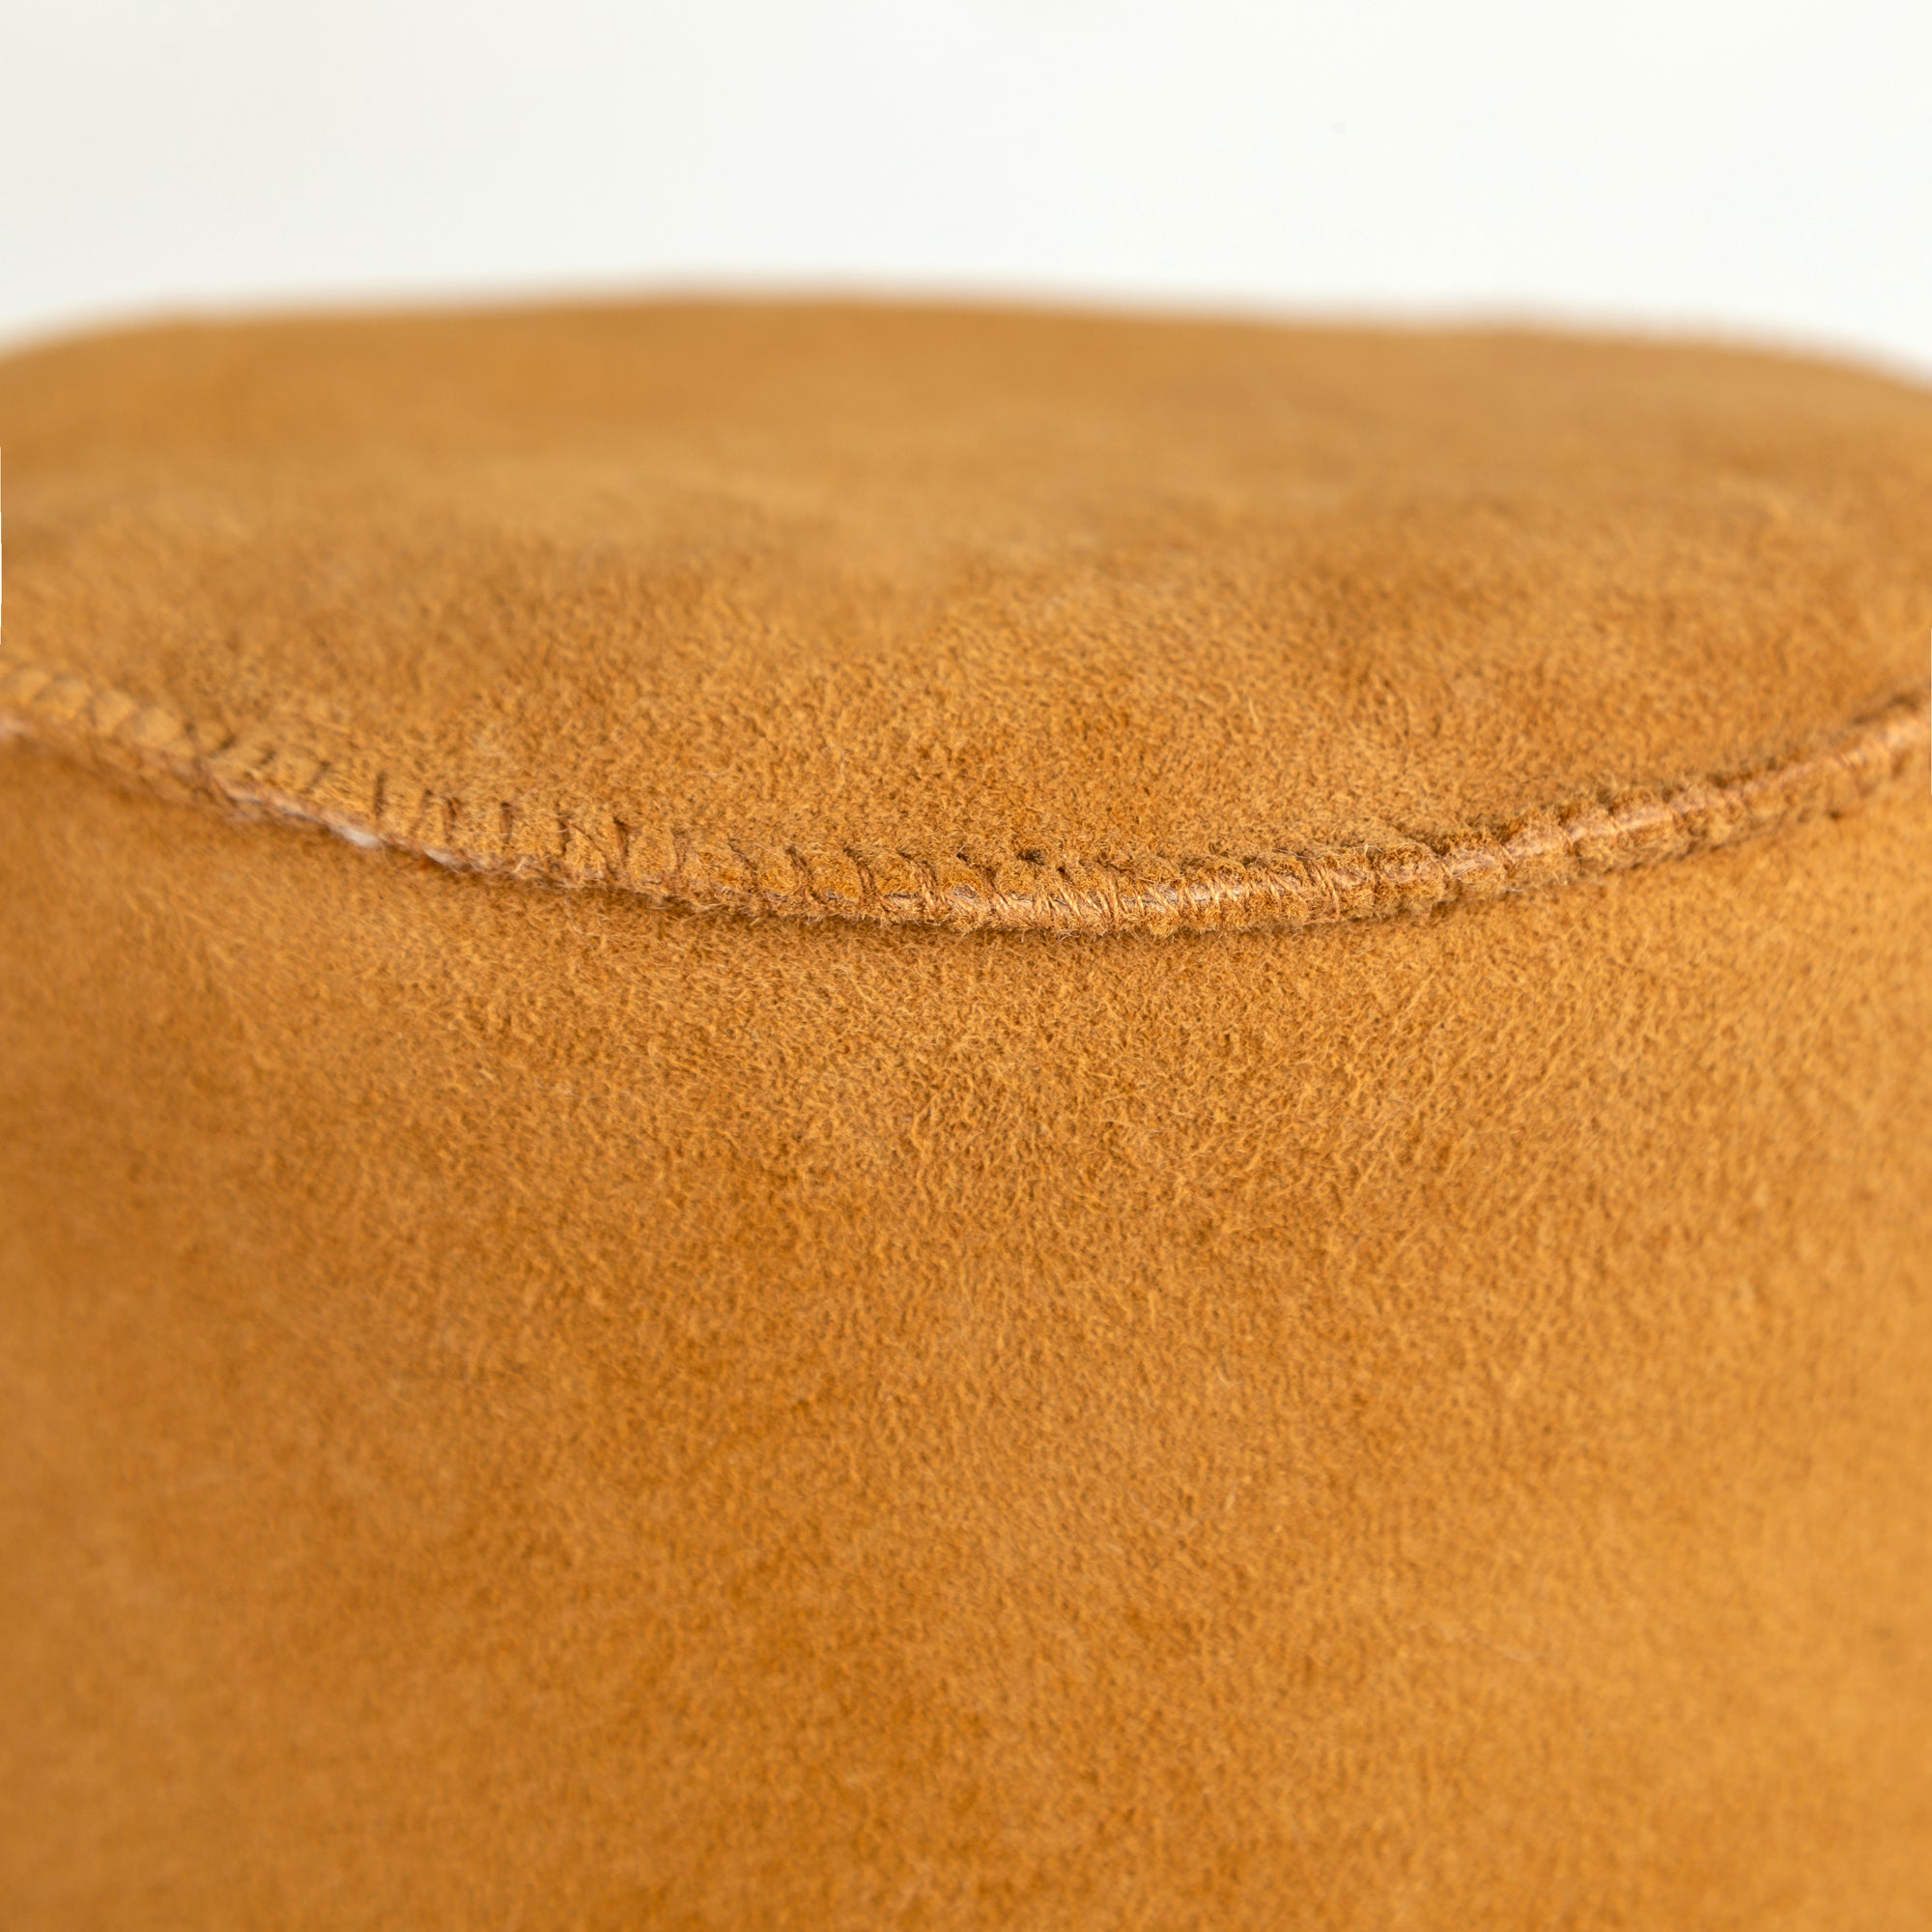 Ugg Sheepskin Reversible Bucket Hat